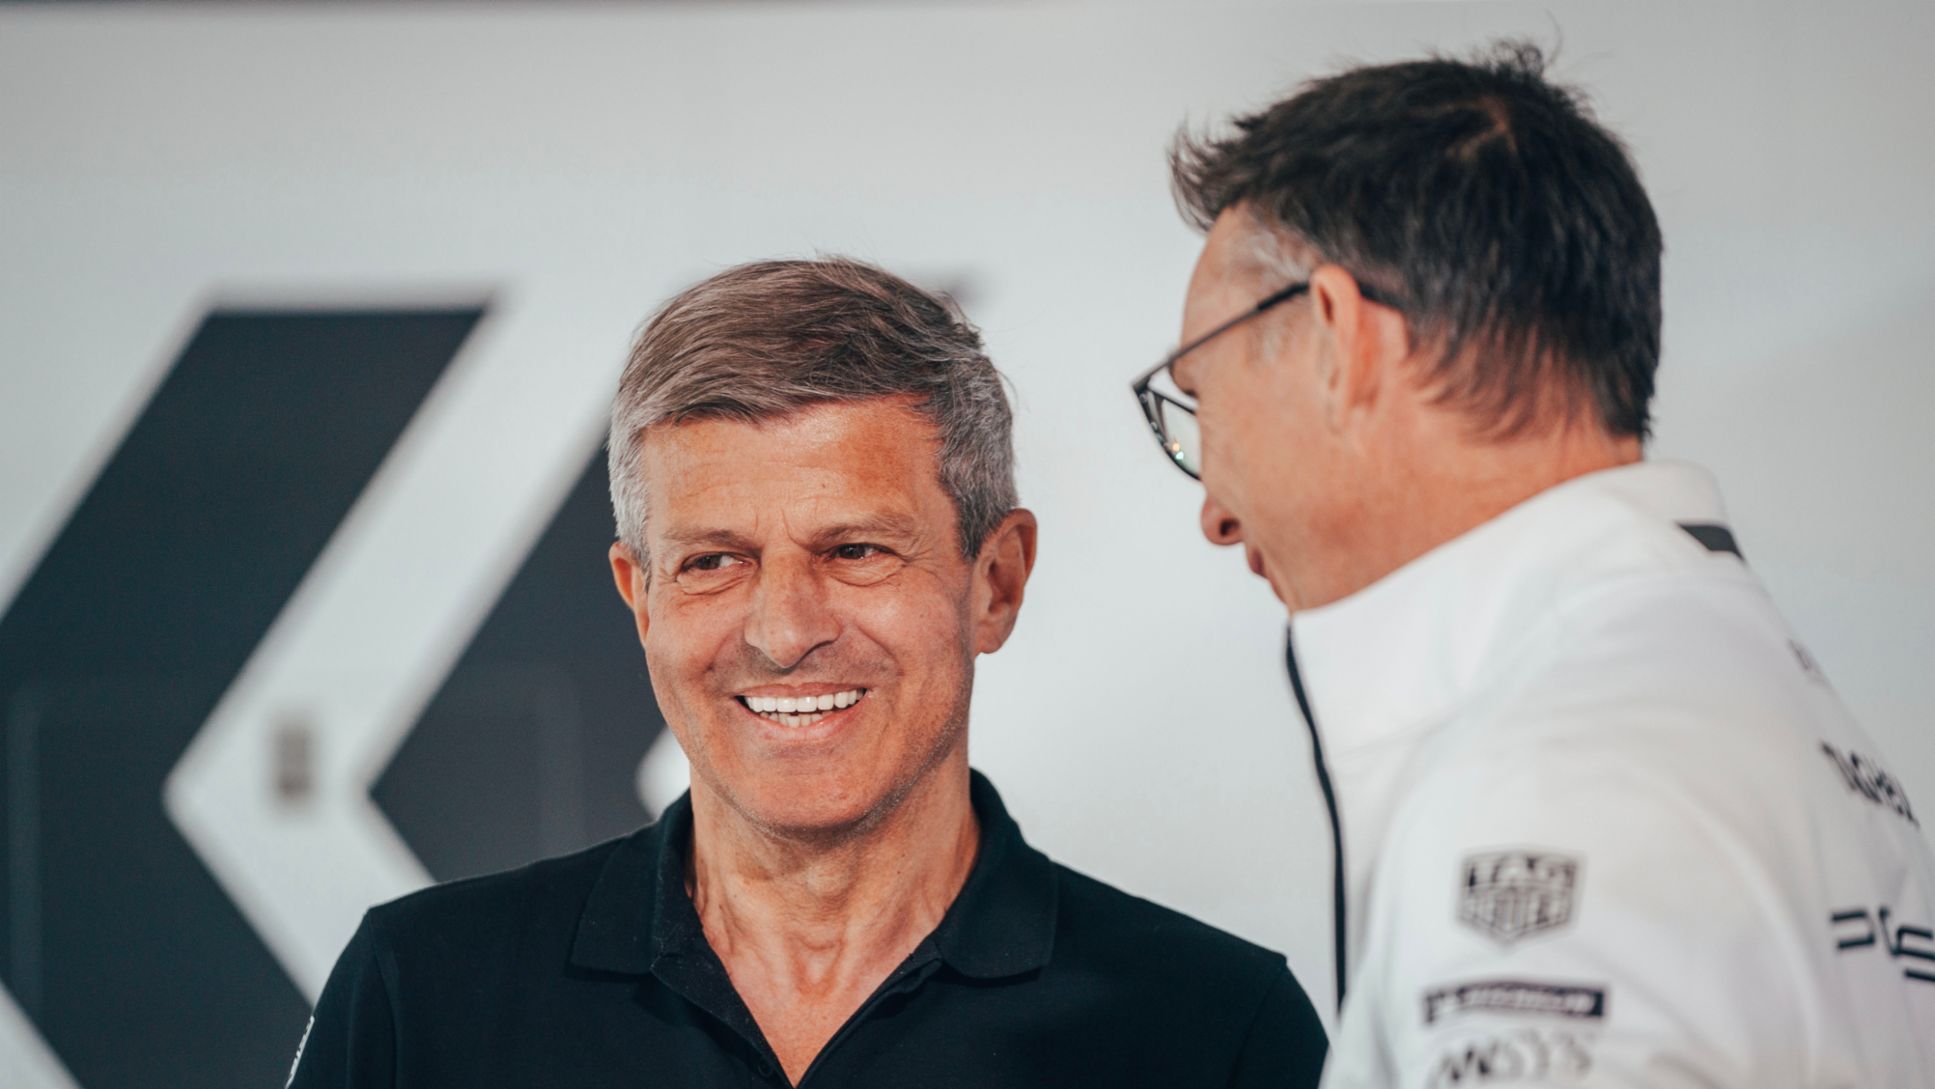 Fritz Enzinger, Vicepresidente de Porsche Motorsport, Amiel Lindesay, Director de Operaciones de Porsche en Fórmula E (i-d), 2021, Porsche AG